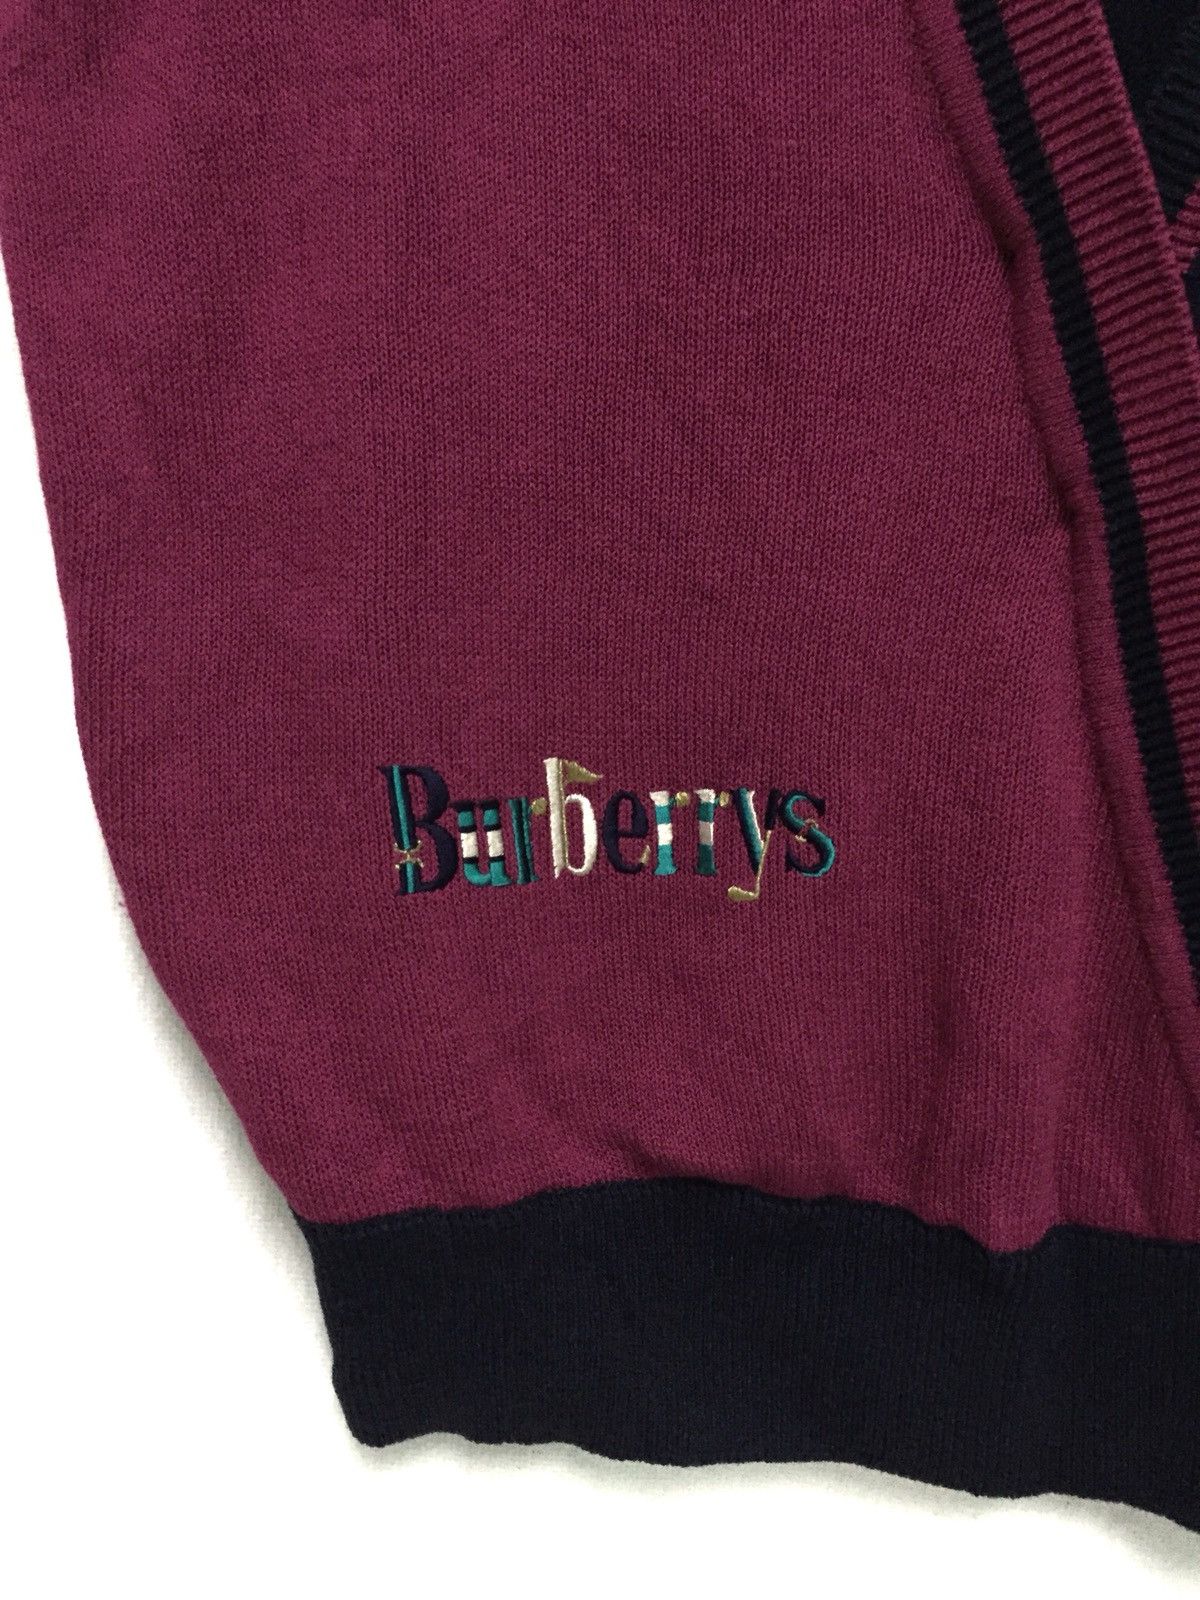 Burberry Burberrys Formal Vest Shirt Spell Out Size US L / EU 52-54 / 3 - 2 Preview